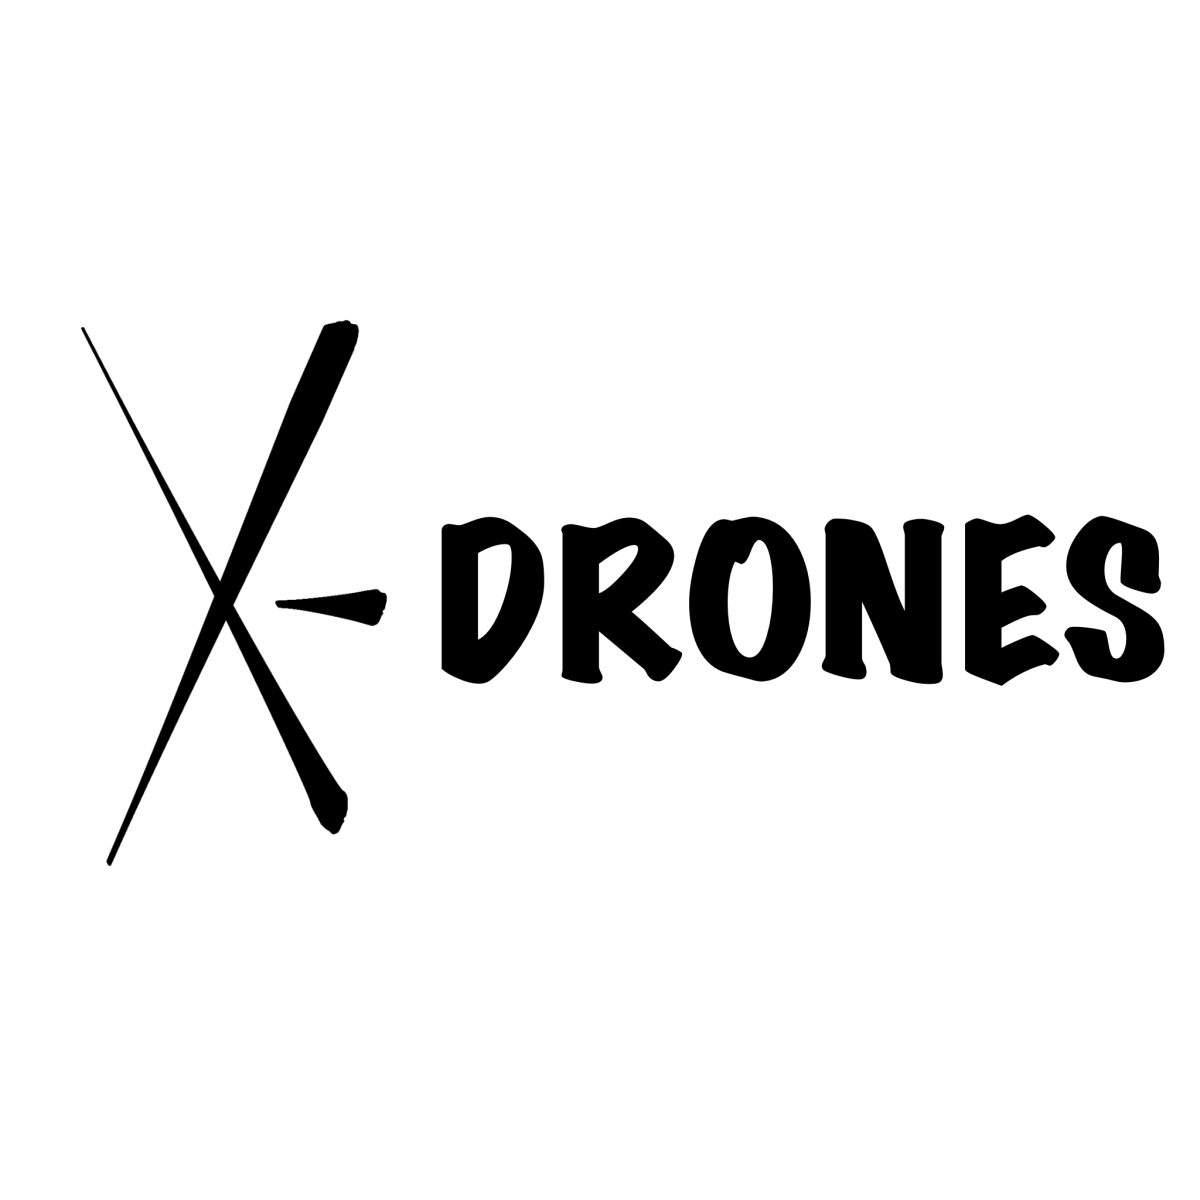 X-DRONES